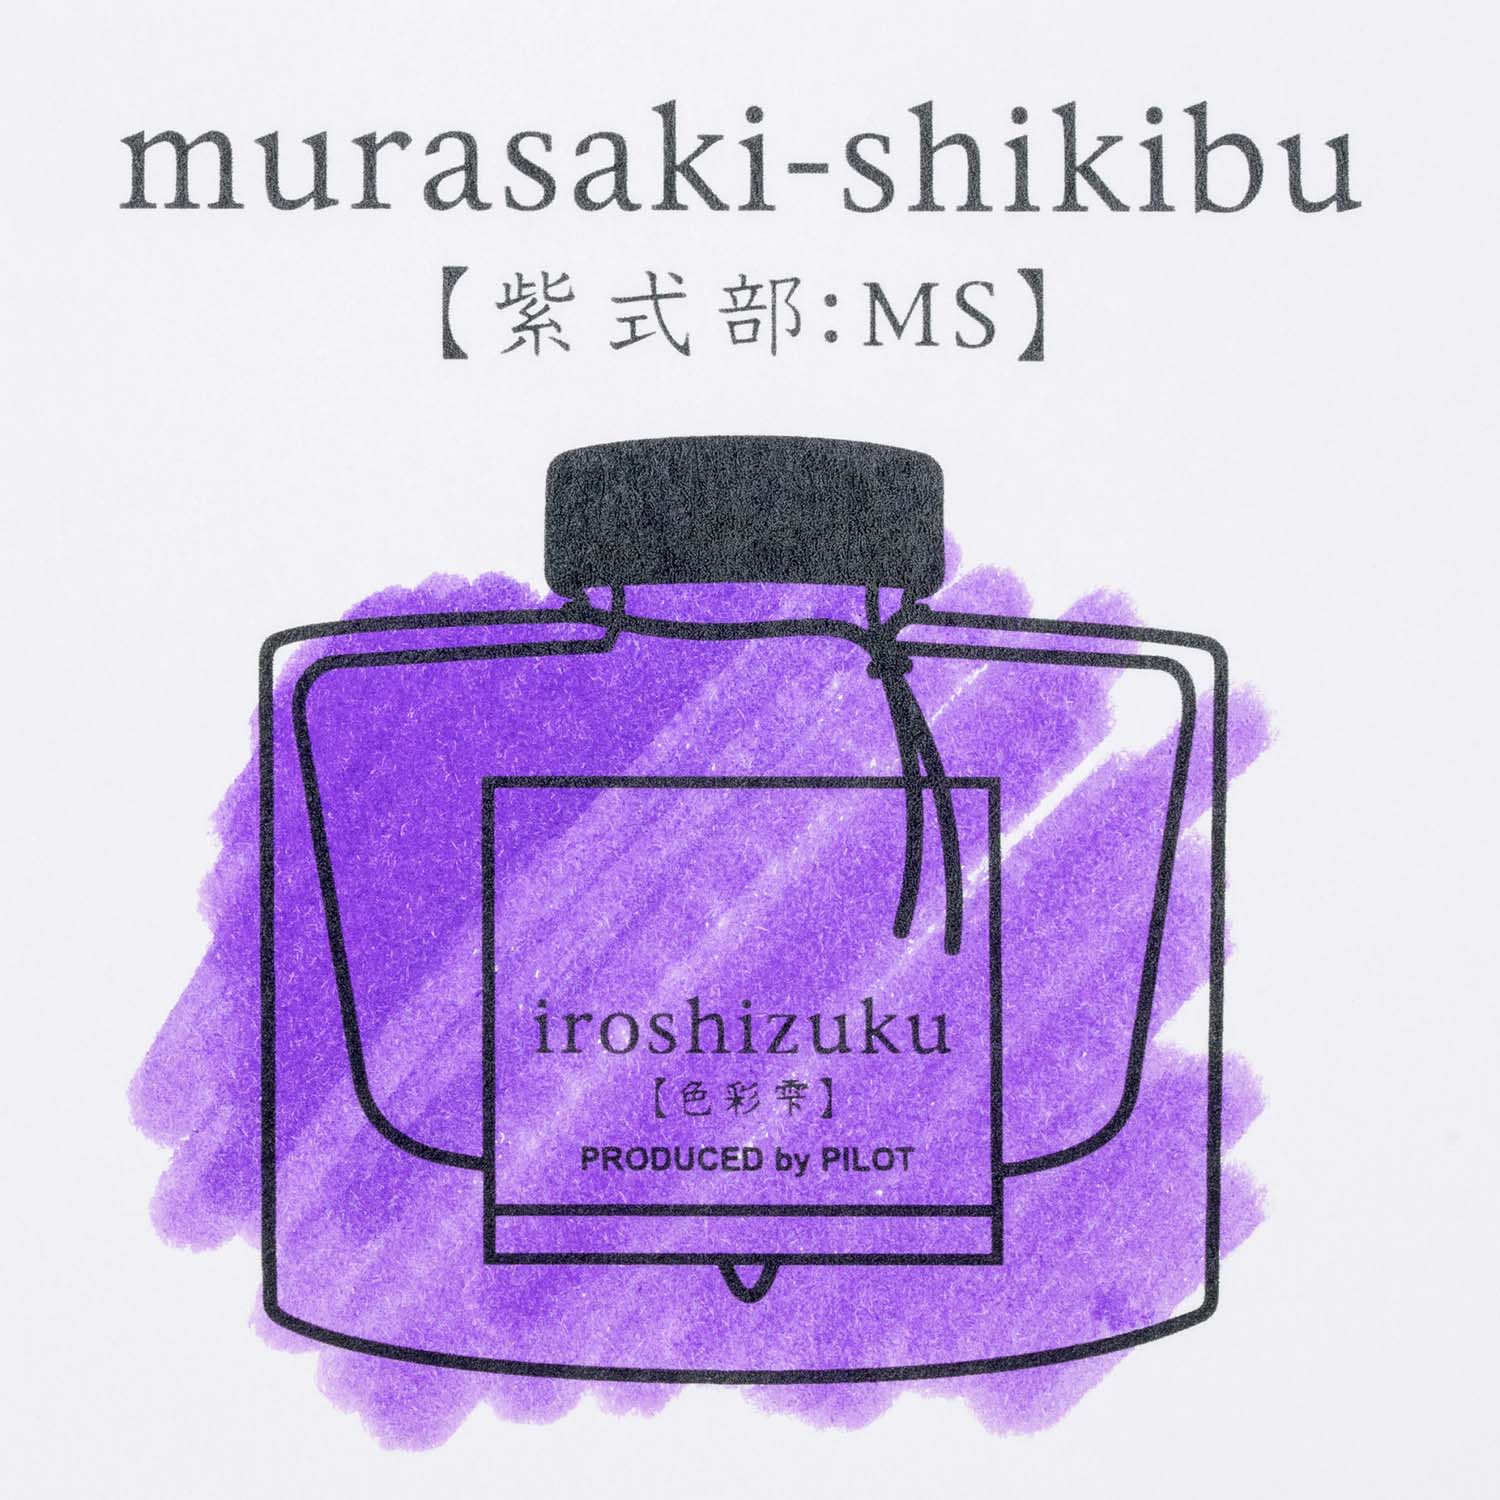 Pilot Iroshizuku Murasaki-shikibu fountain pen ink sample